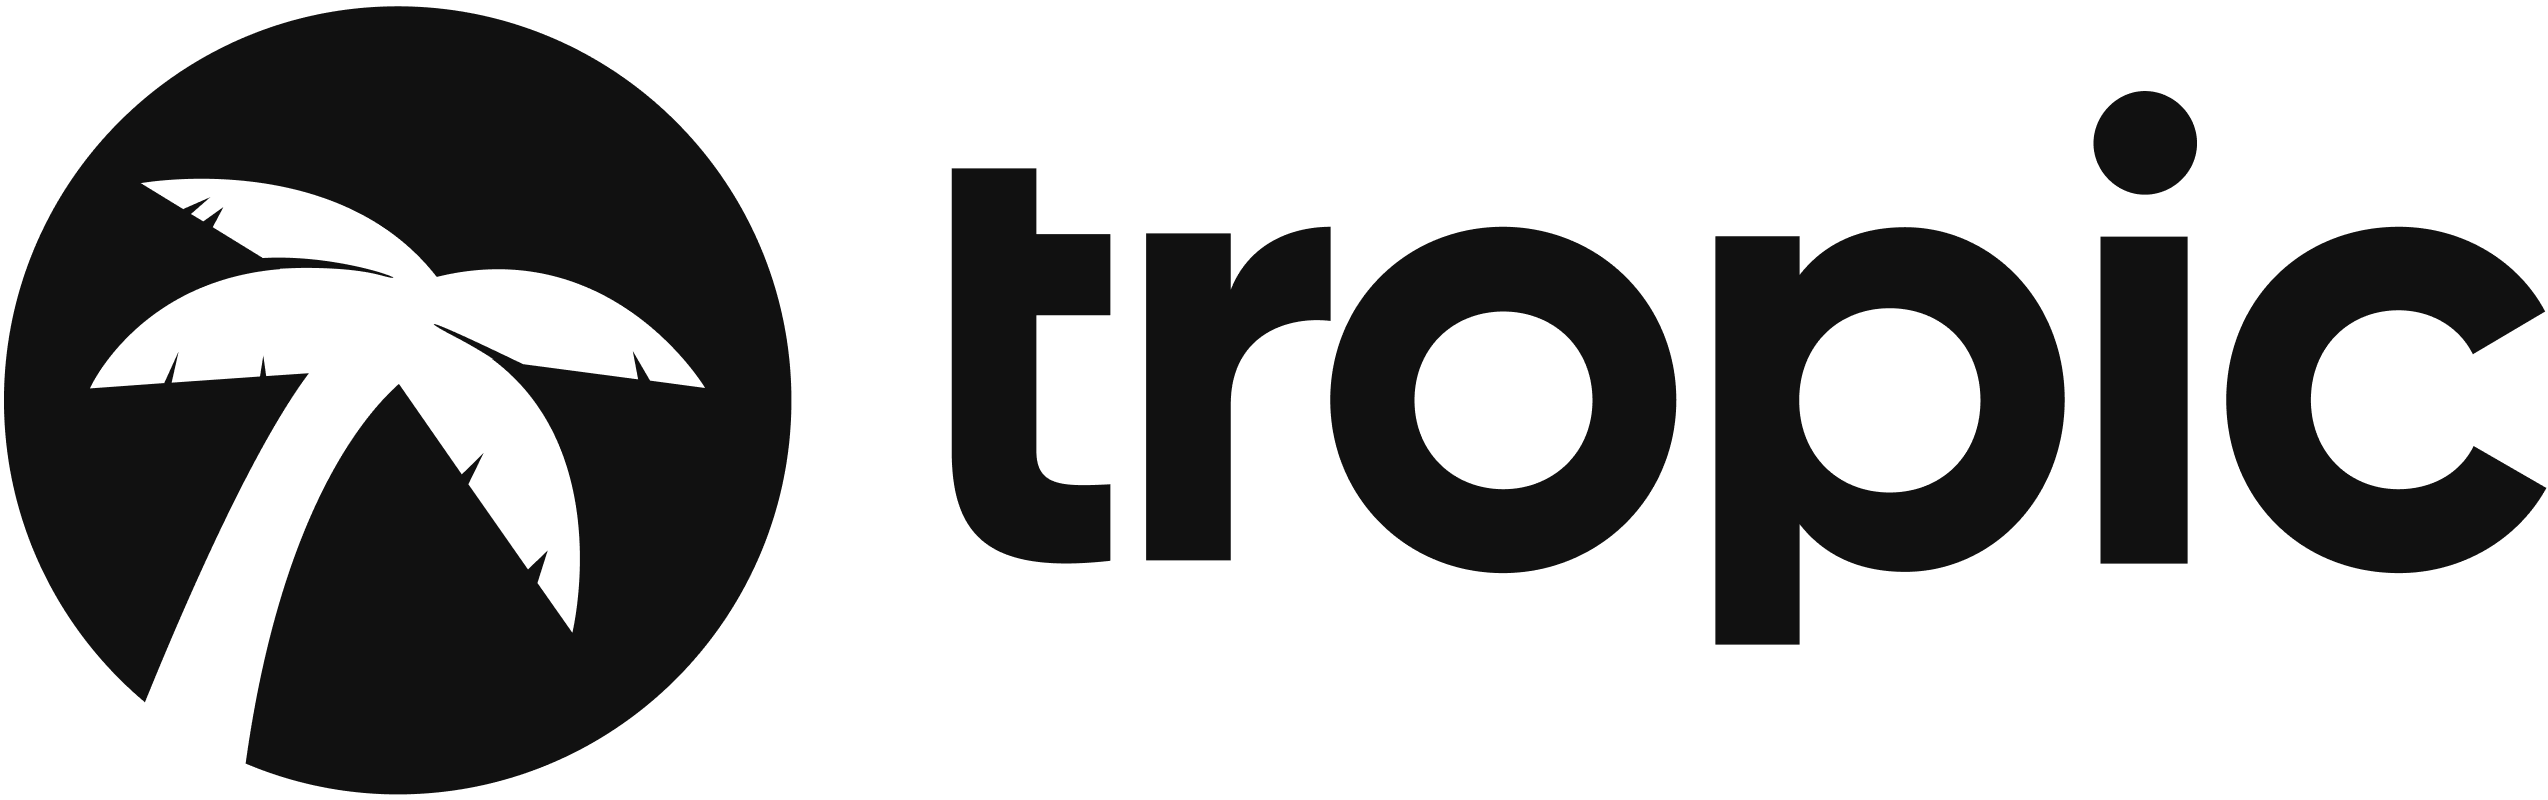 Tropic logo